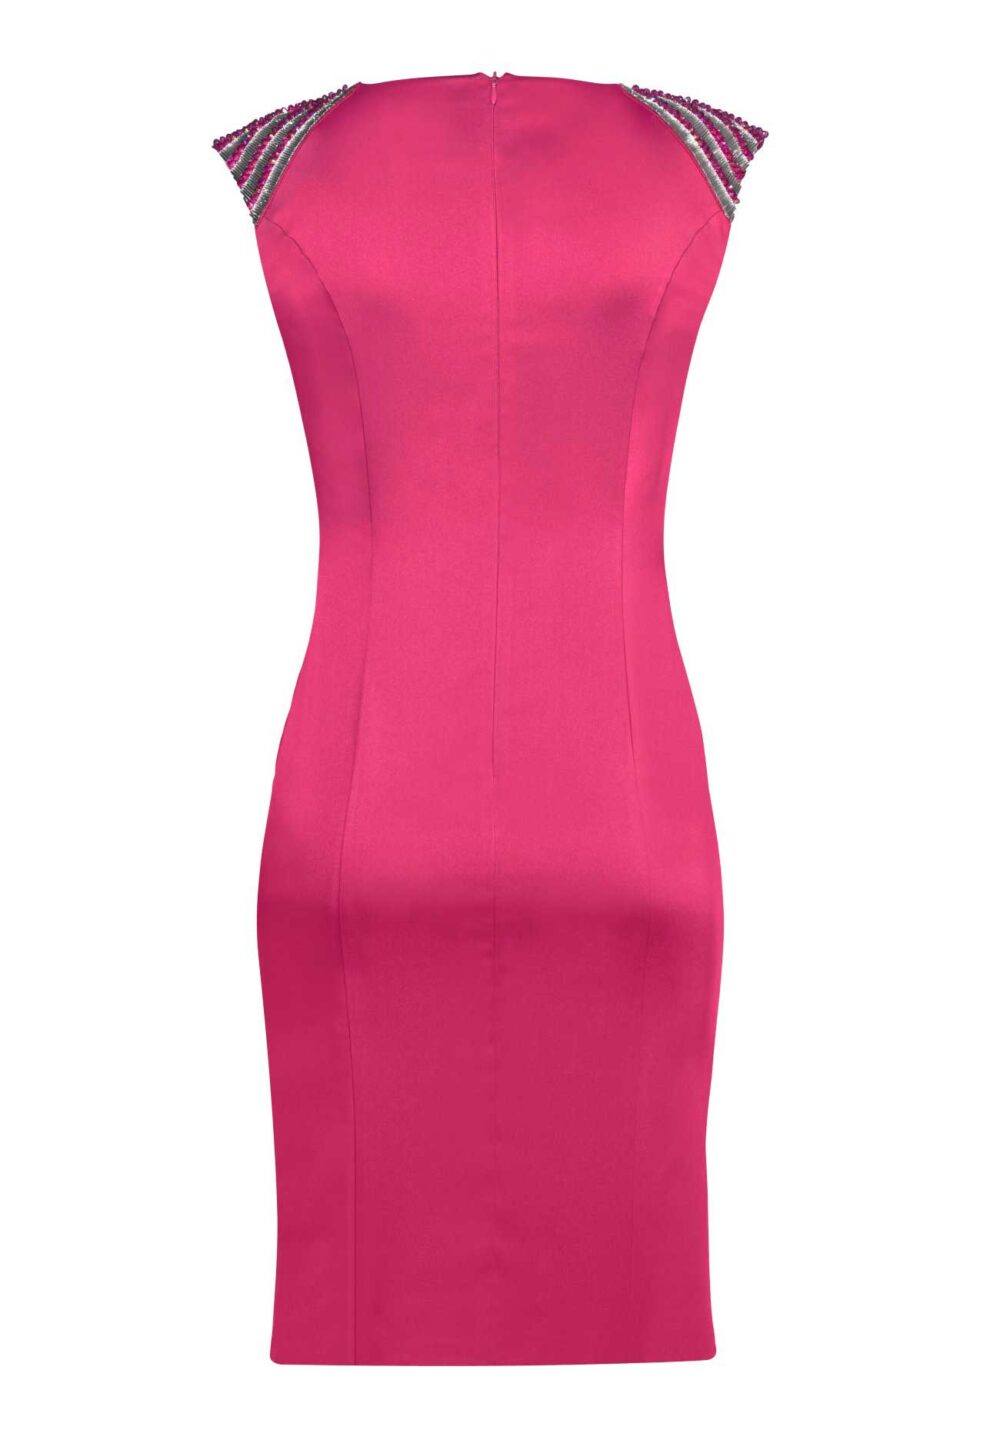 APART Damen Designer-Satinkleid Etuikleid Stretchkleid Perlen Pink Silber EDEL Missforty